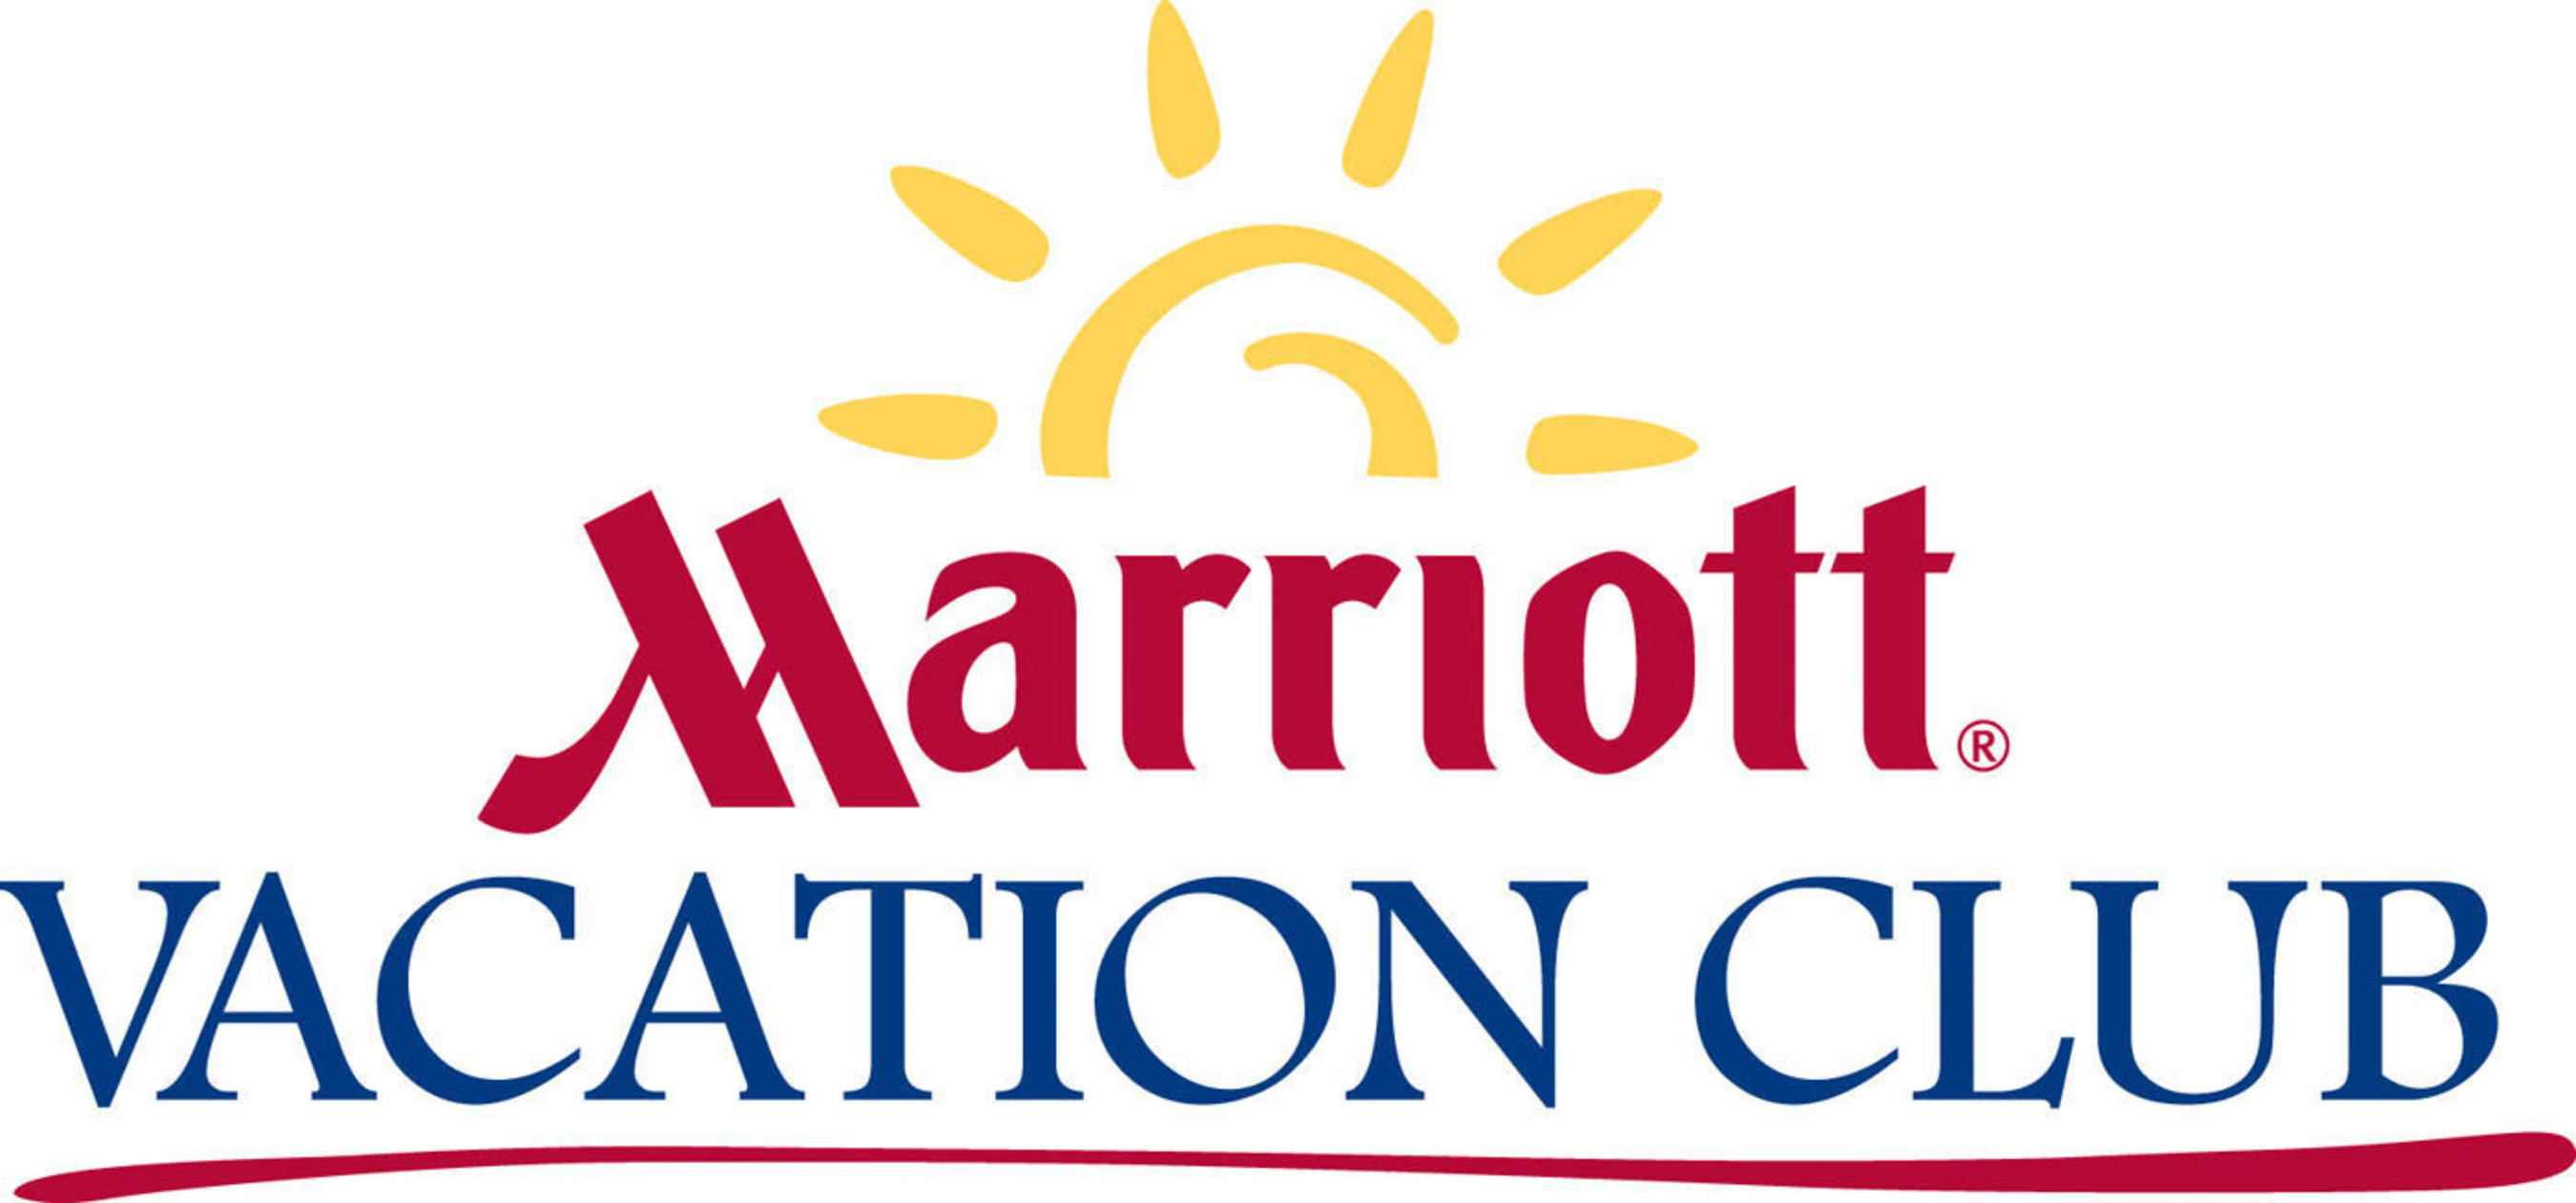 Marriott Vacation Club logo. (PRNewsFoto/Marriott Vacation Club) (PRNewsFoto/)